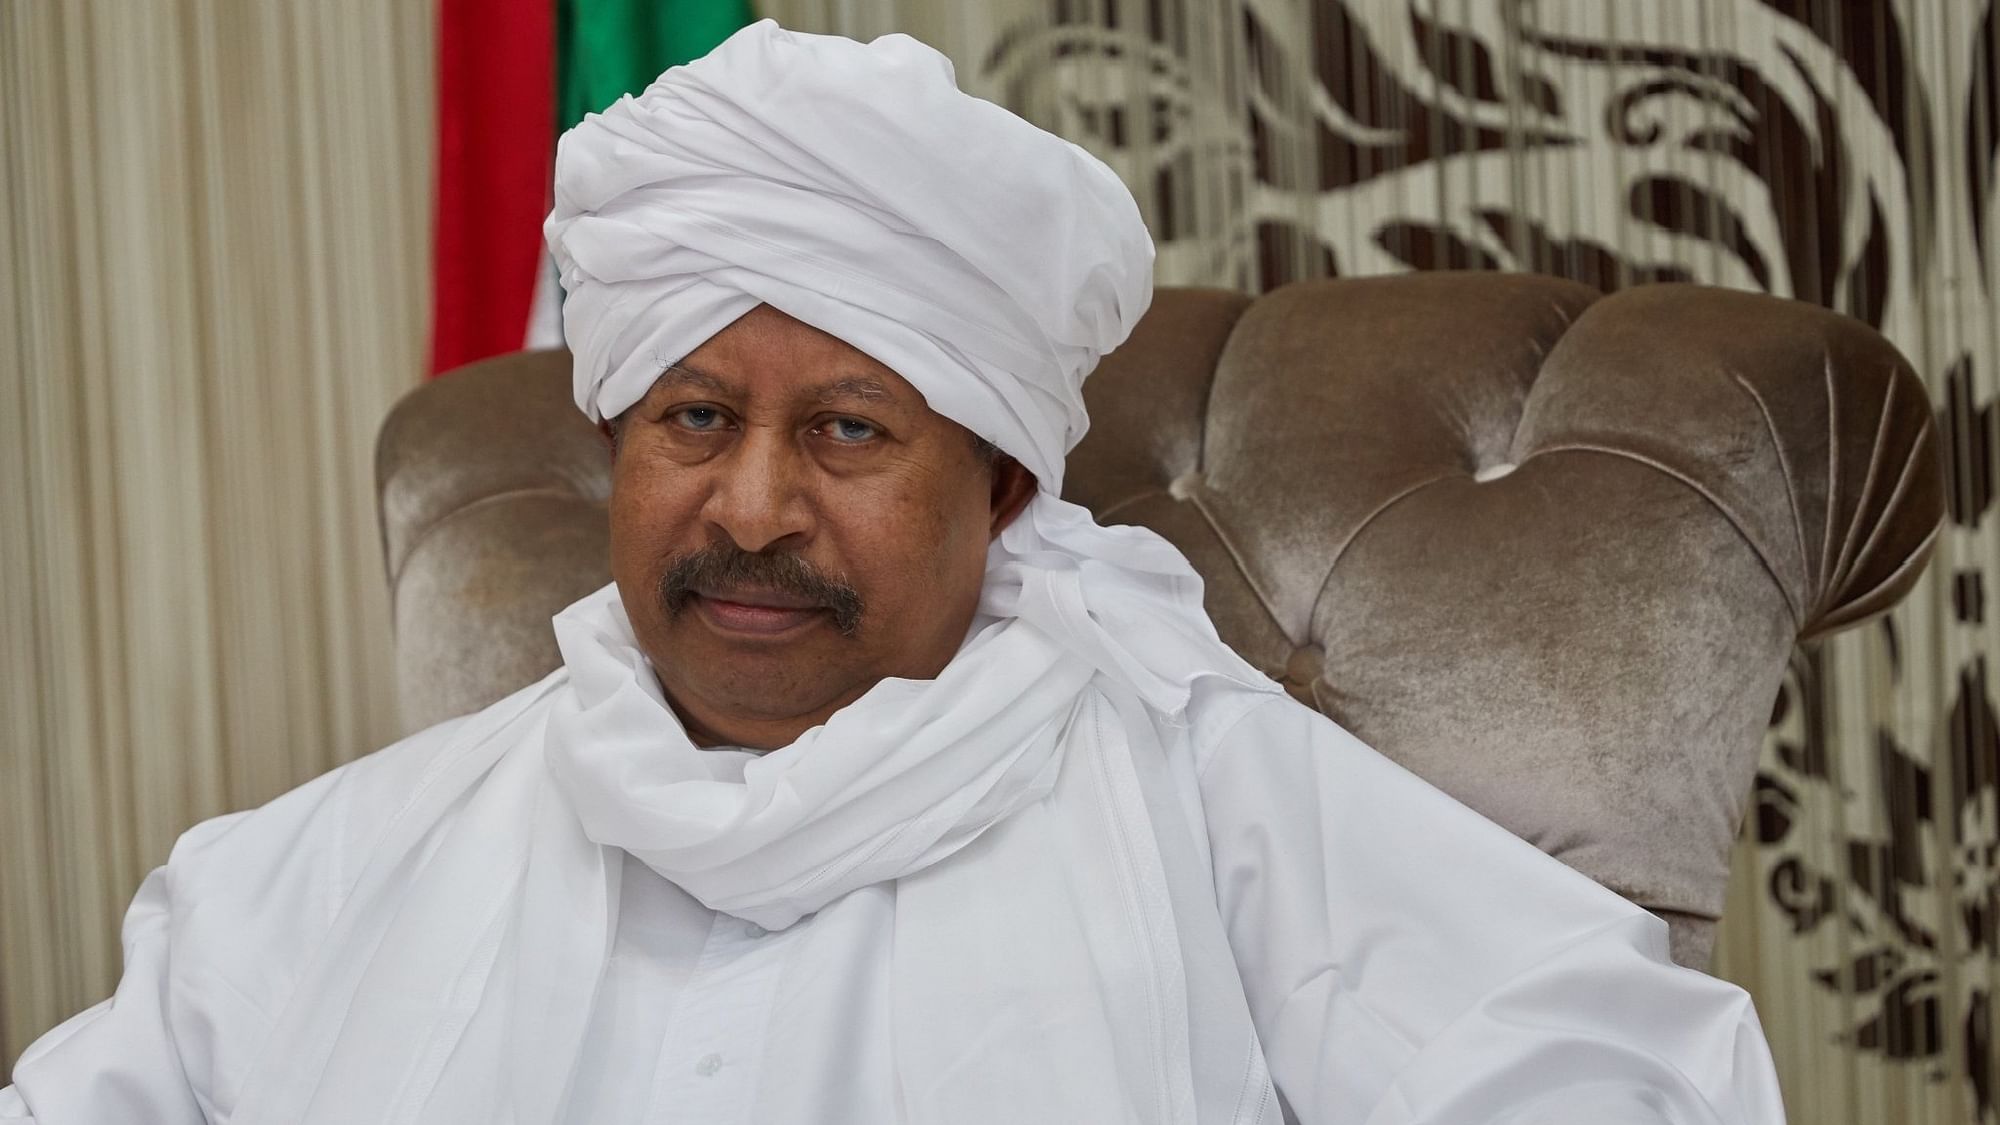 <div class="paragraphs"><p>Sudan's prime minister Abdallah Hamdok.&nbsp;</p></div>